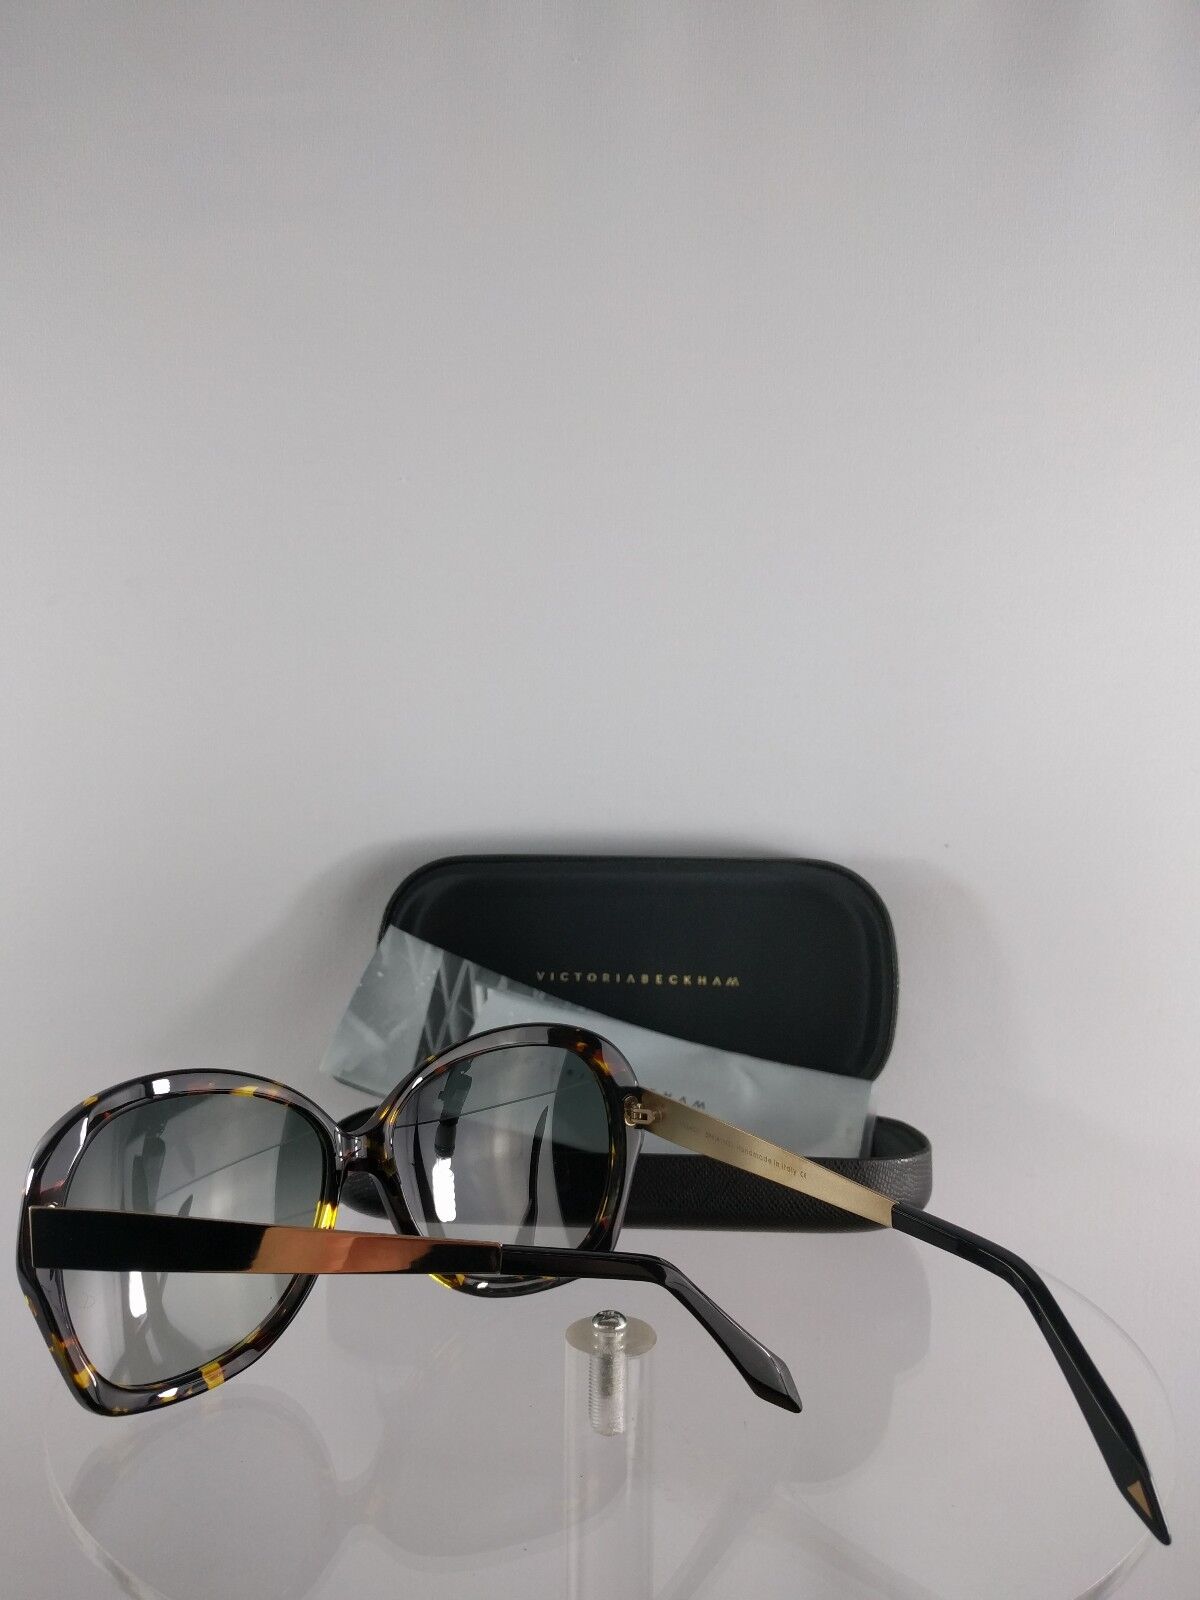 Brand New Authentic Victoria Beckham Sunglasses VBS4 C11 Gold Tortoise Frame